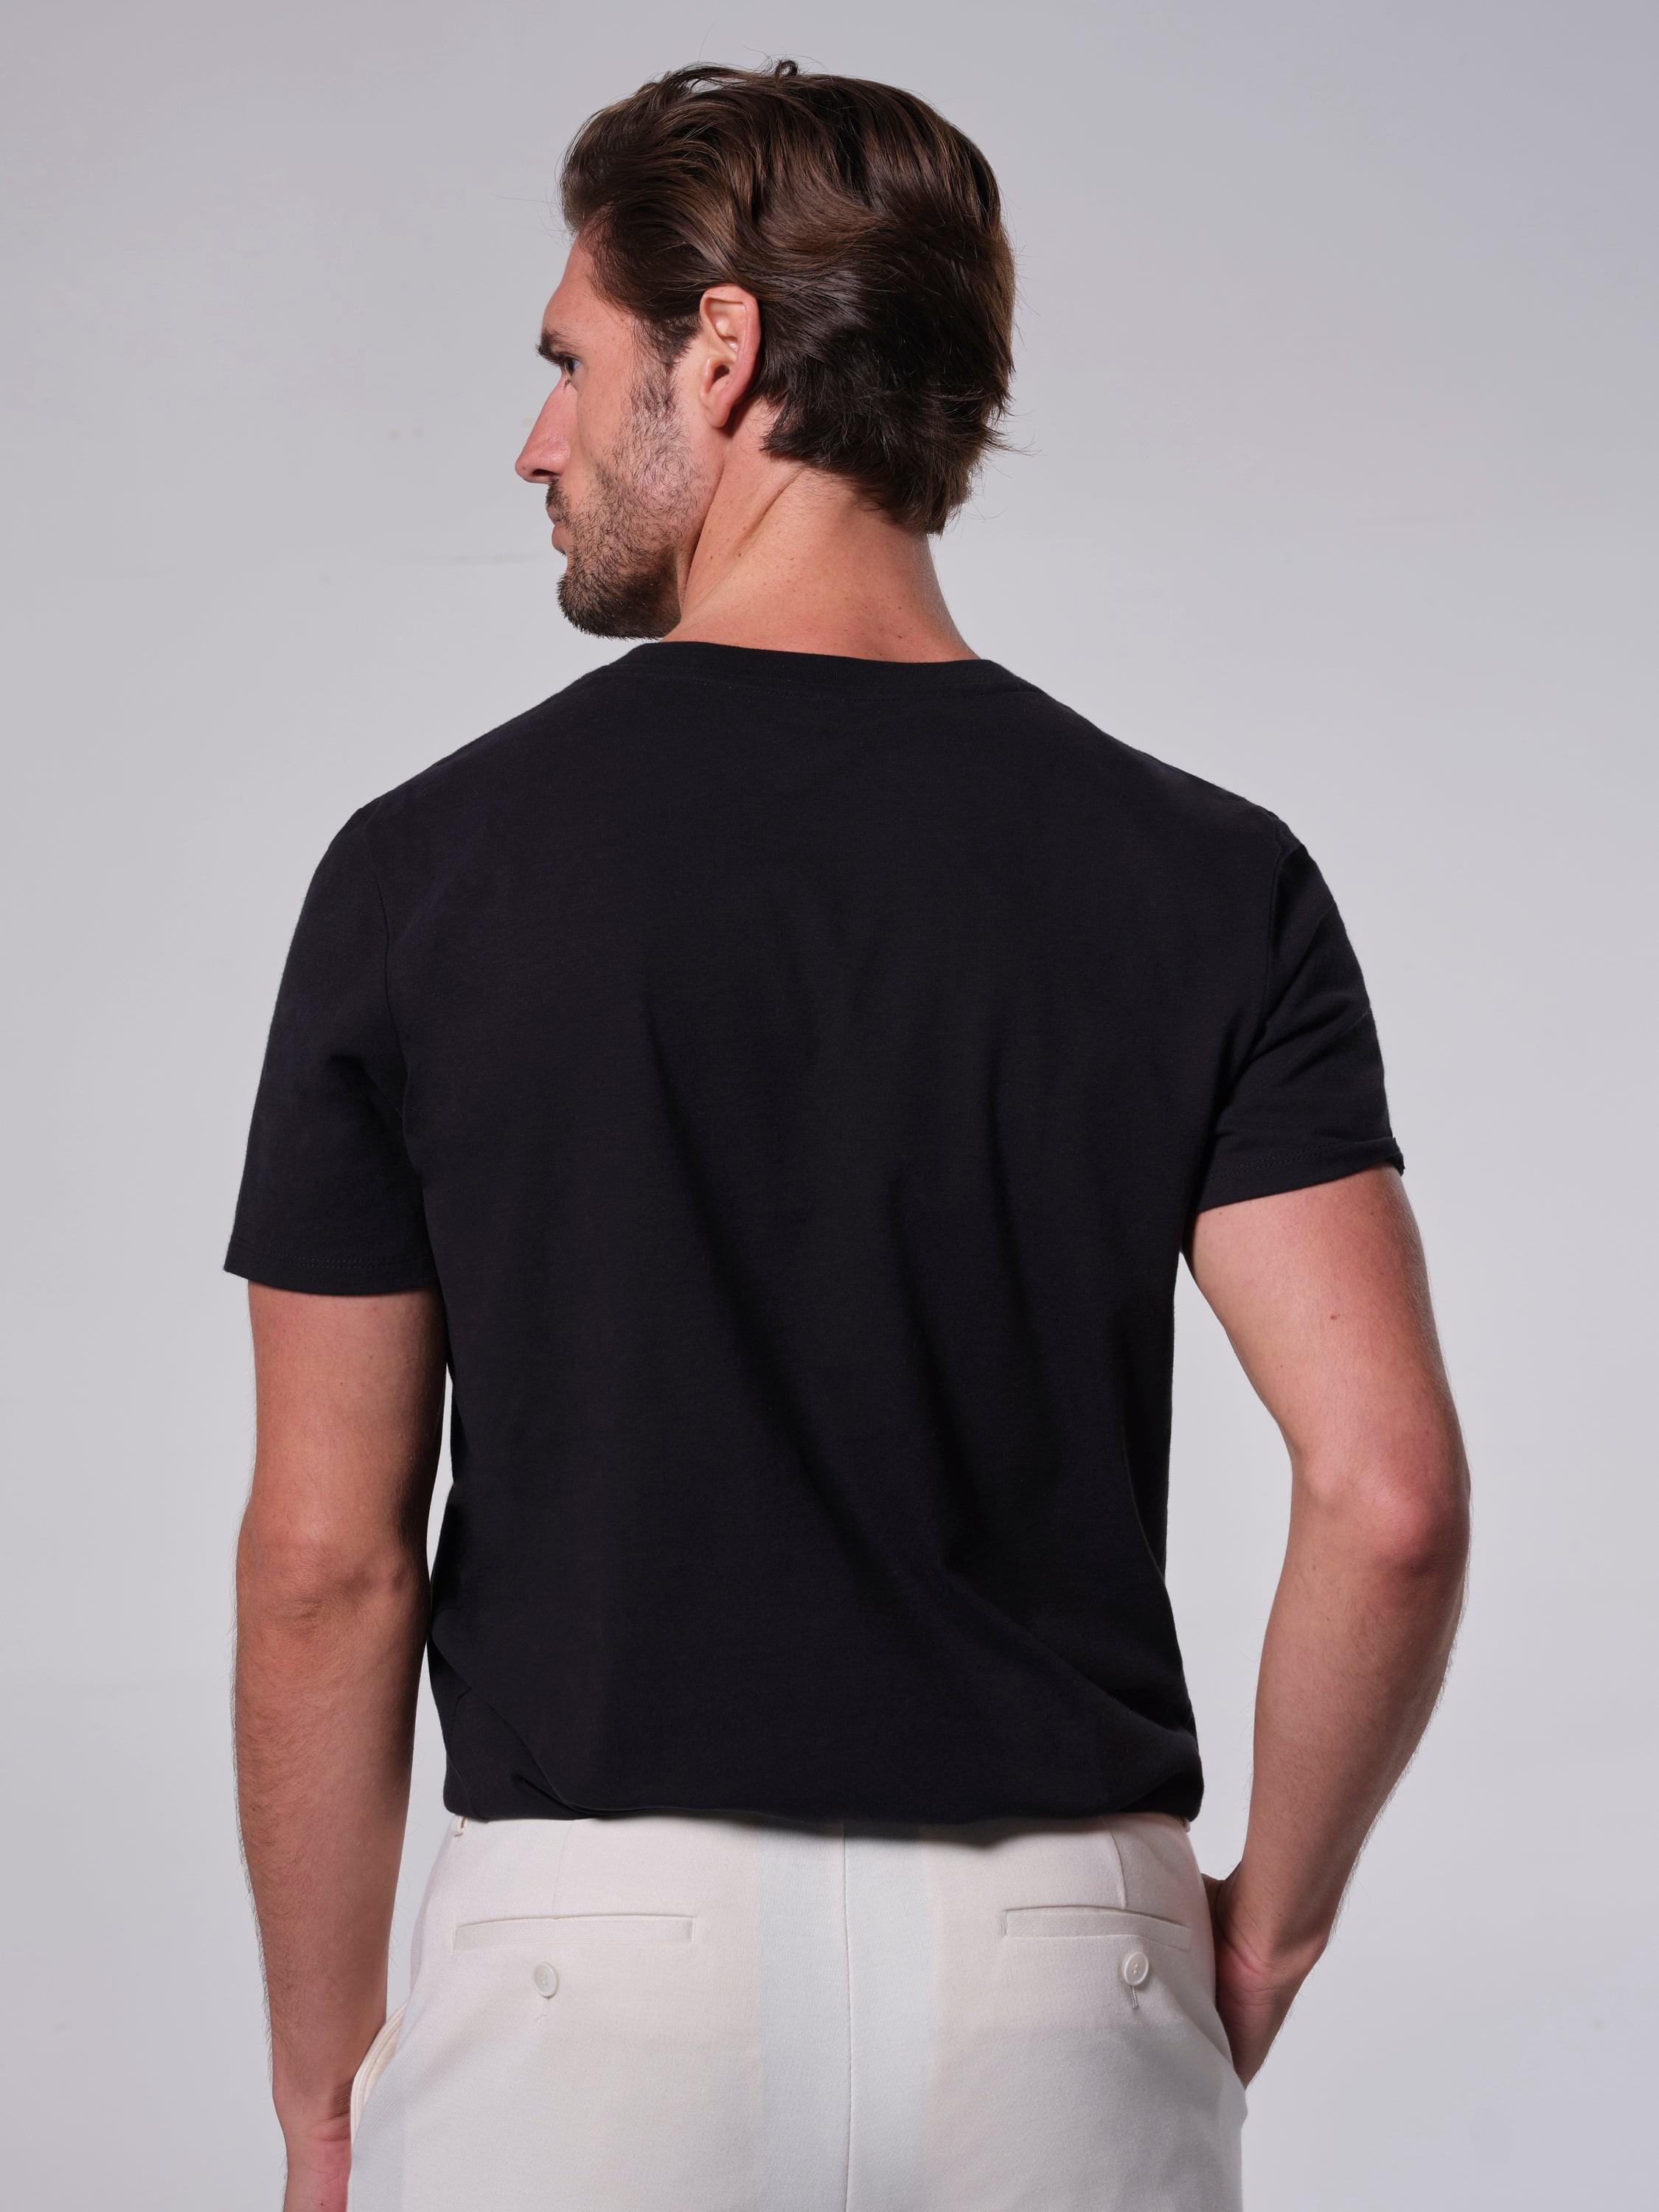 Long Staple Cotton Peached Jersey V-Neck T-Shirt - Black